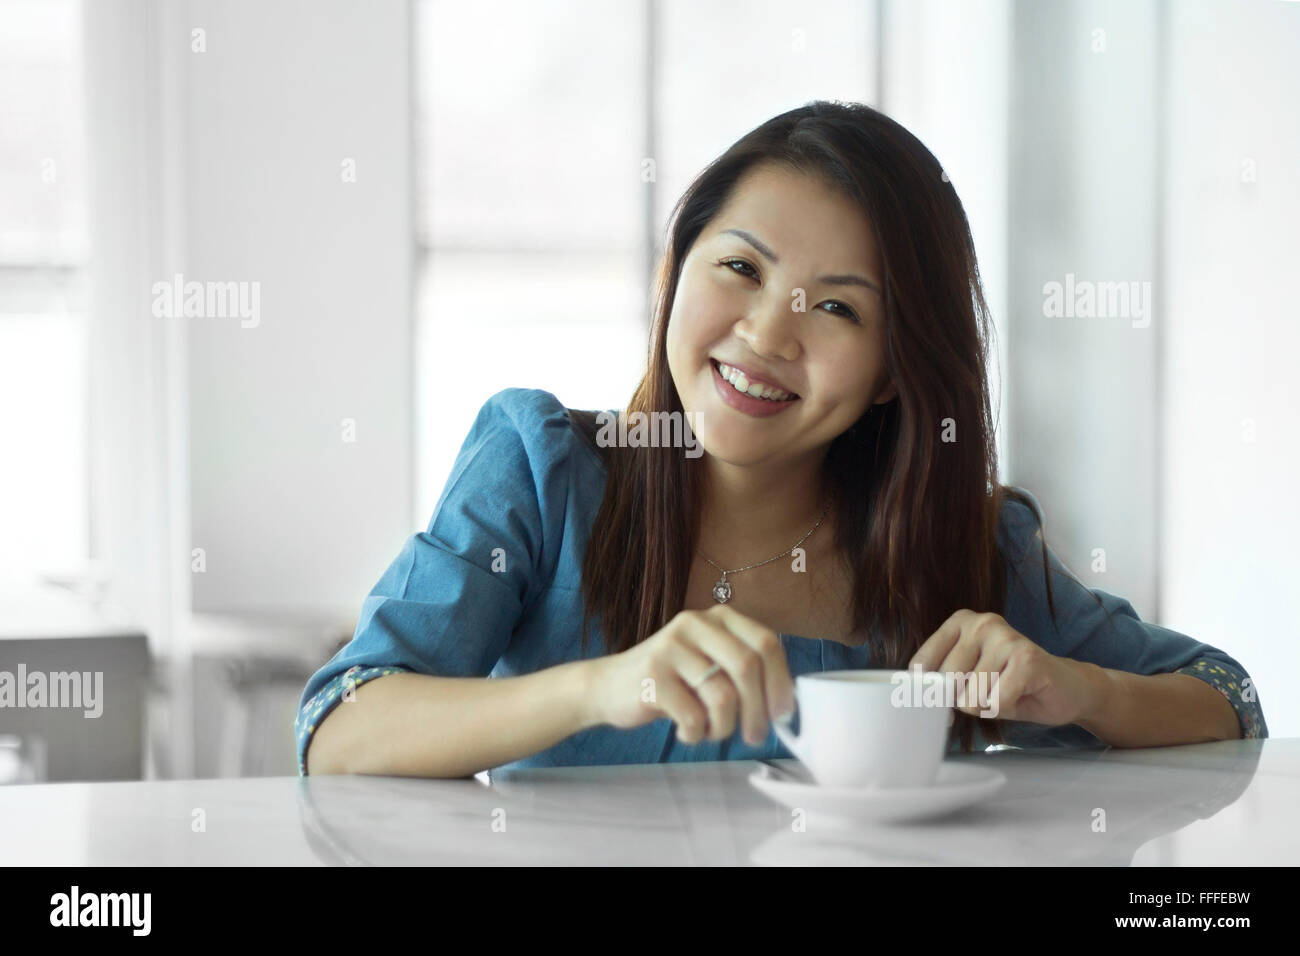 Femmina asiatica belle donne ritratti bere una tazzina di caffè, ragazza cinese relax uno stile di vita in cafe Foto Stock